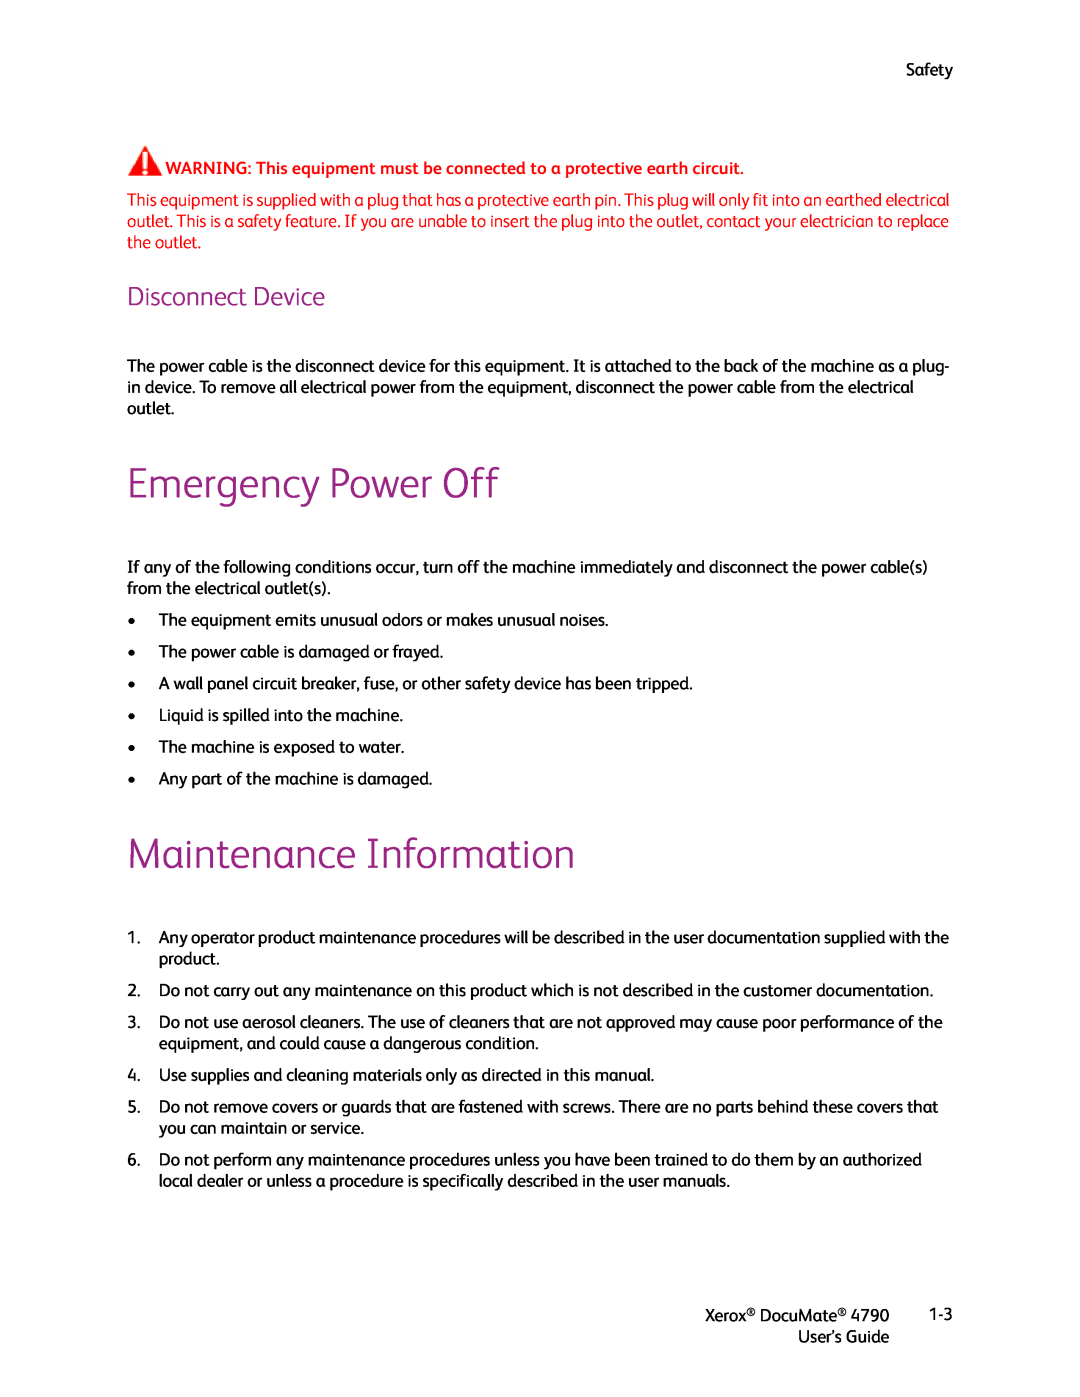 Xerox xerox documate manual Emergency Power Off, Maintenance Information, Disconnect Device 